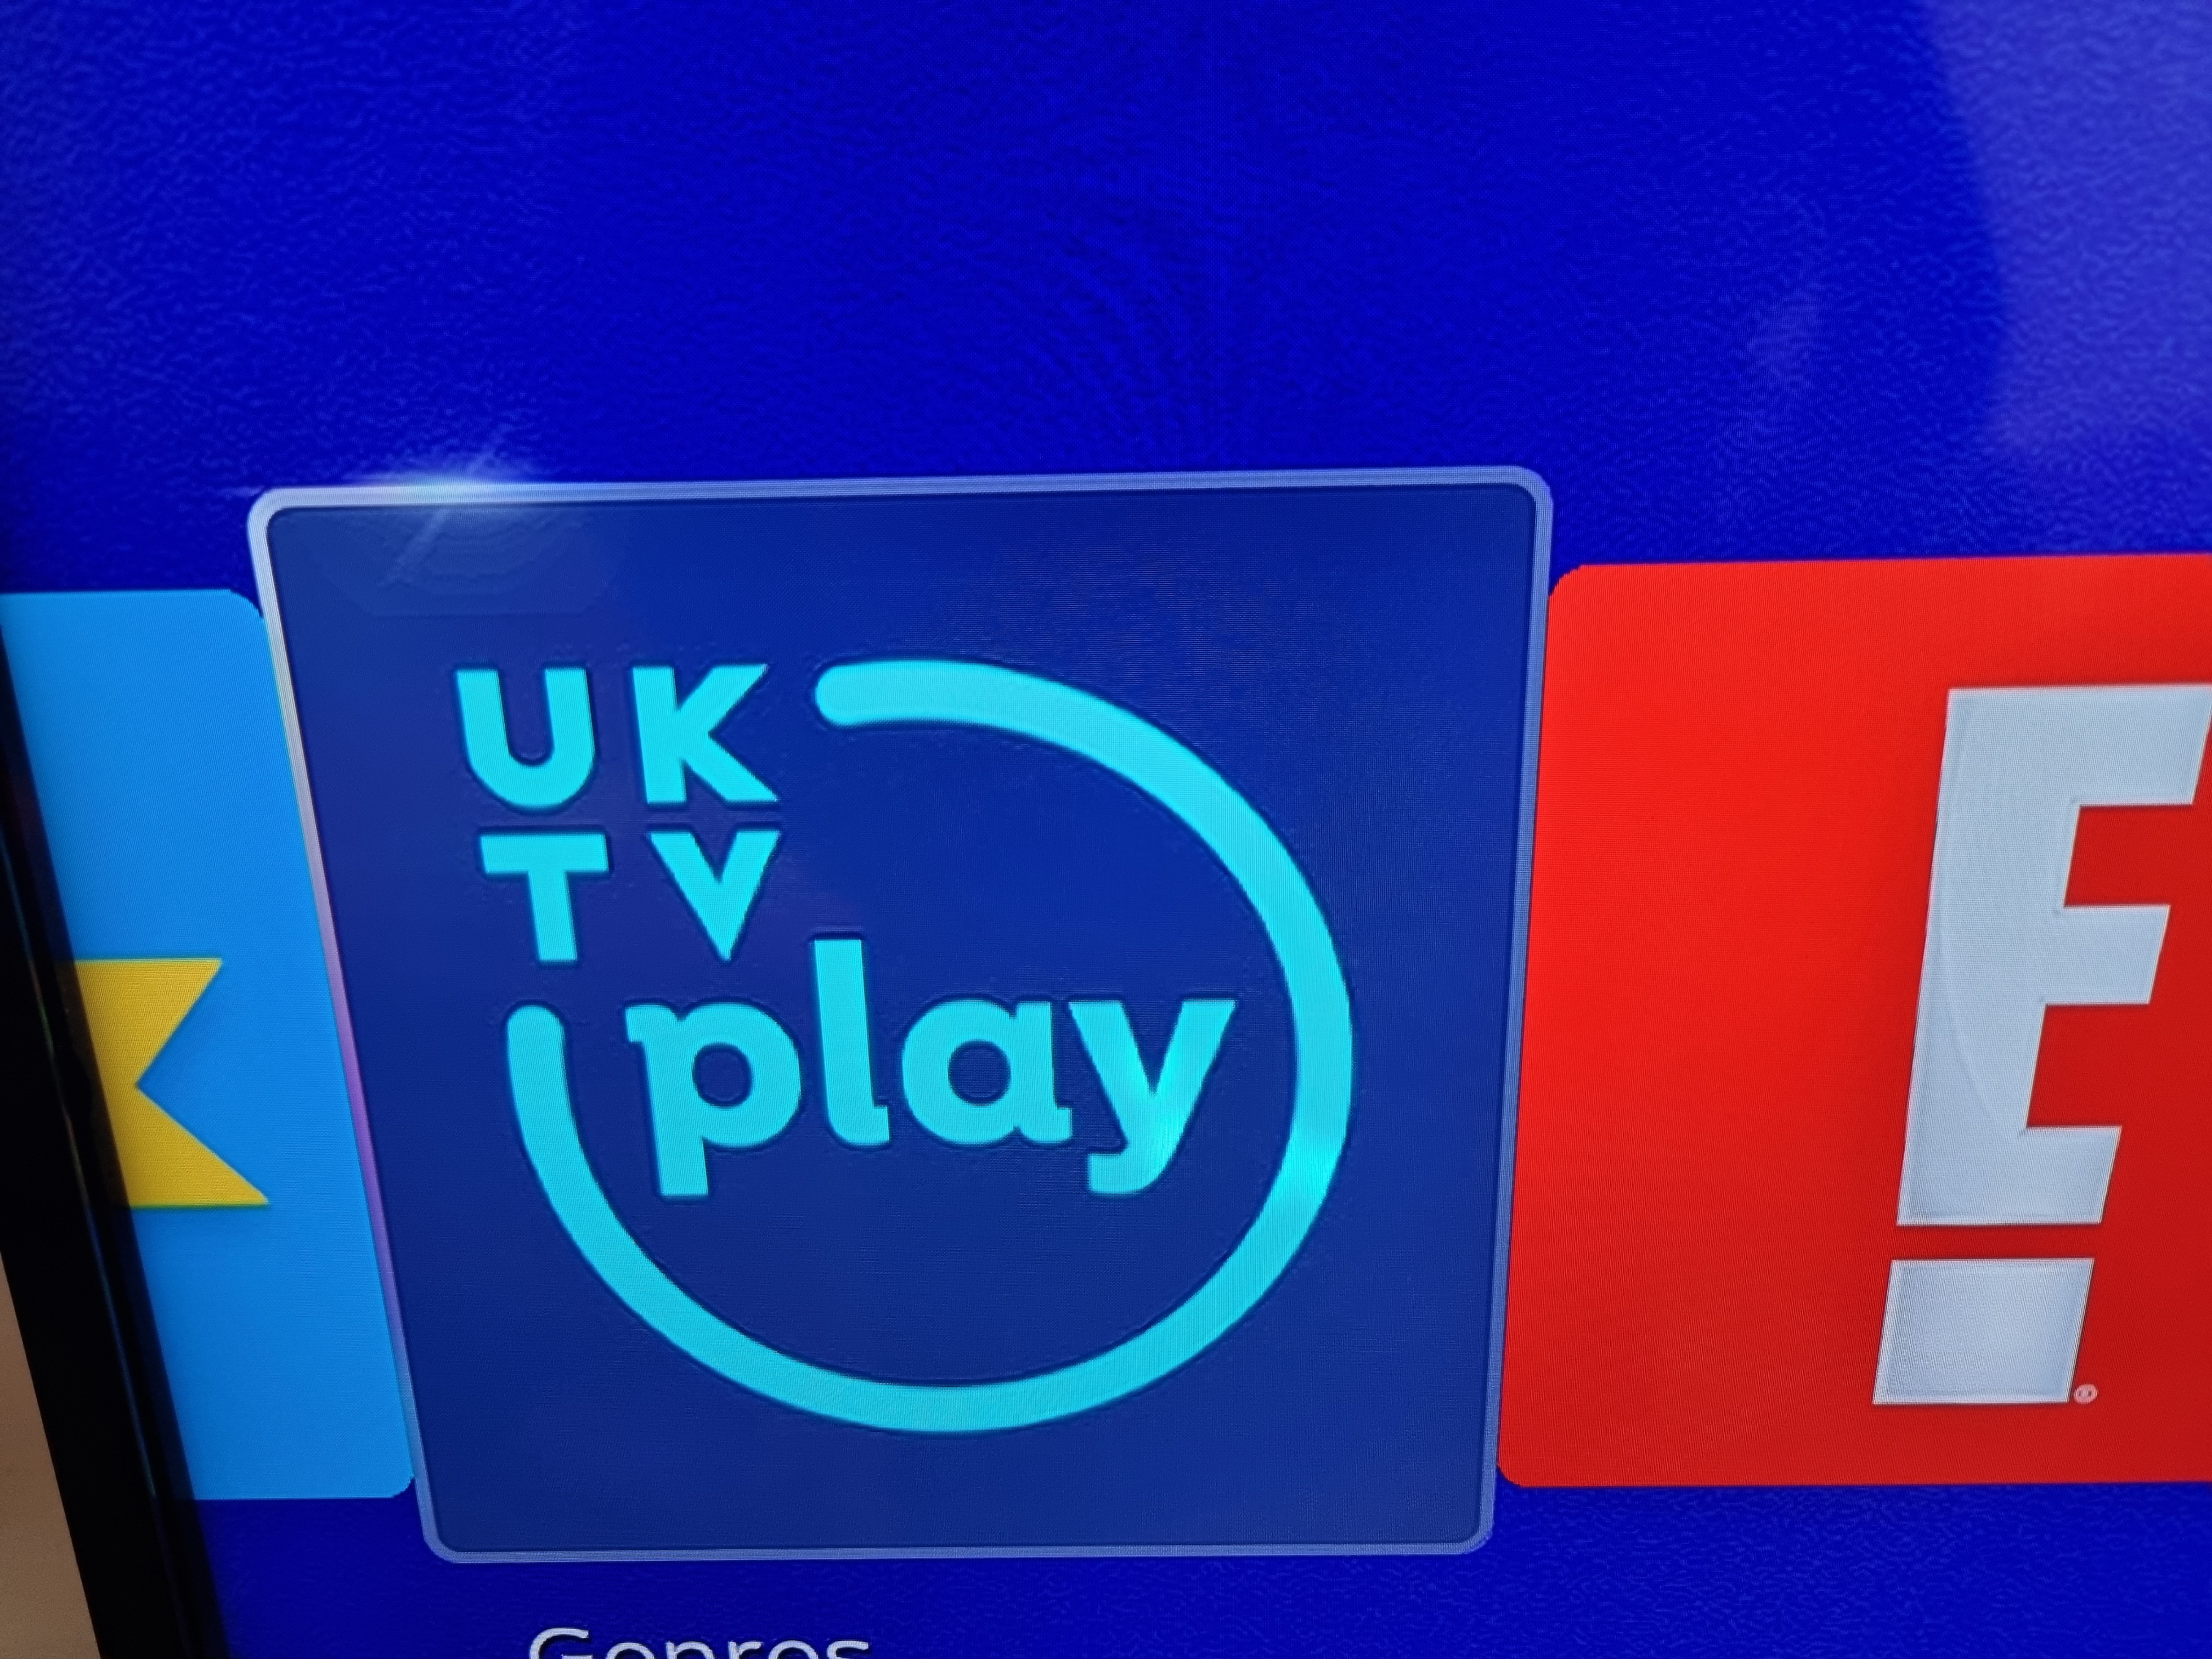 Re UKTV Play Sky Community